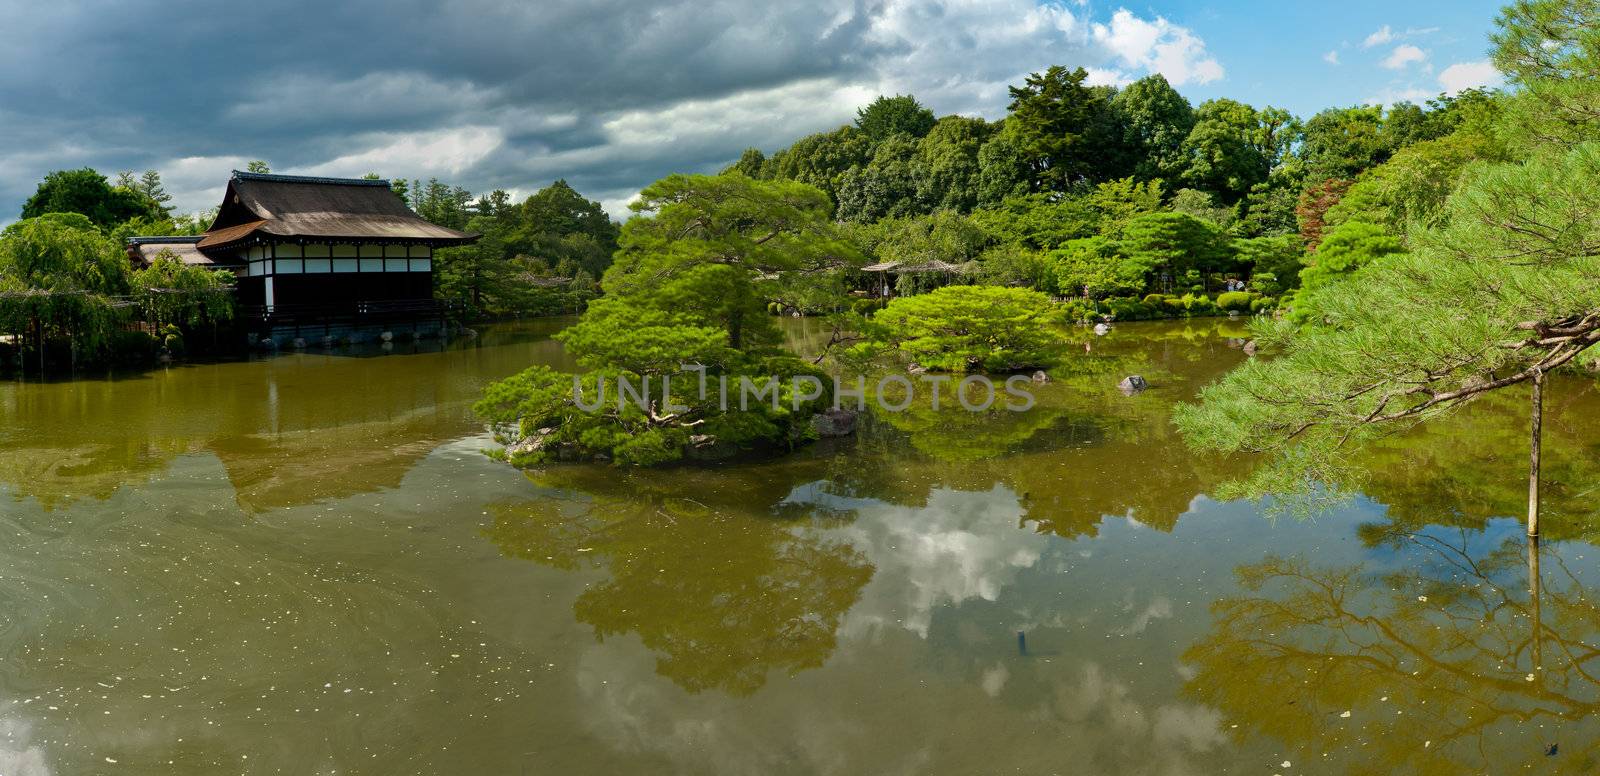 Japanese garden reflection by fyletto